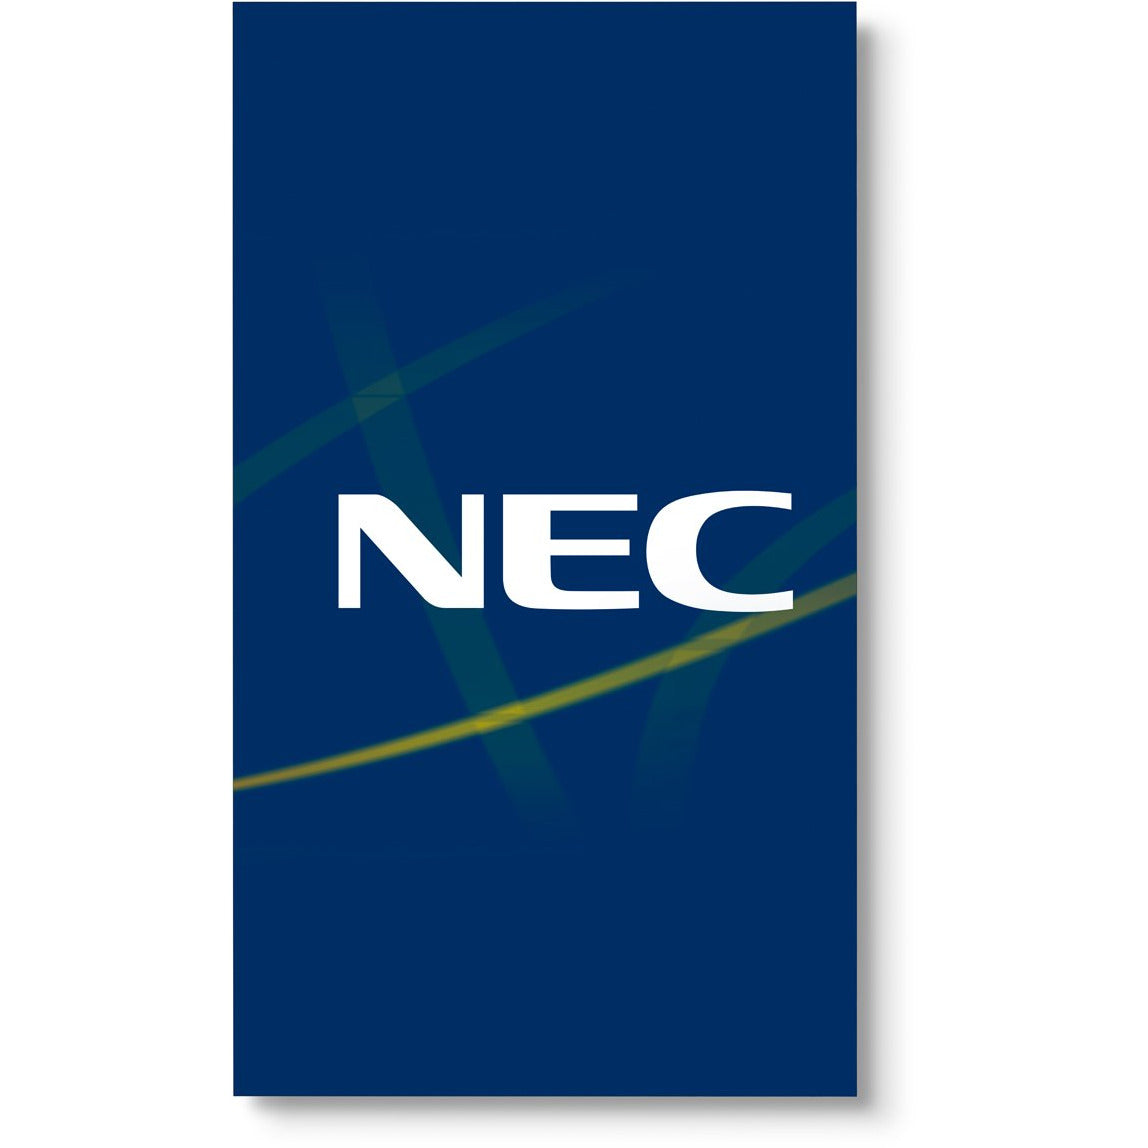 NEC MultiSync® UN552V LCD 55" Video Wall Display